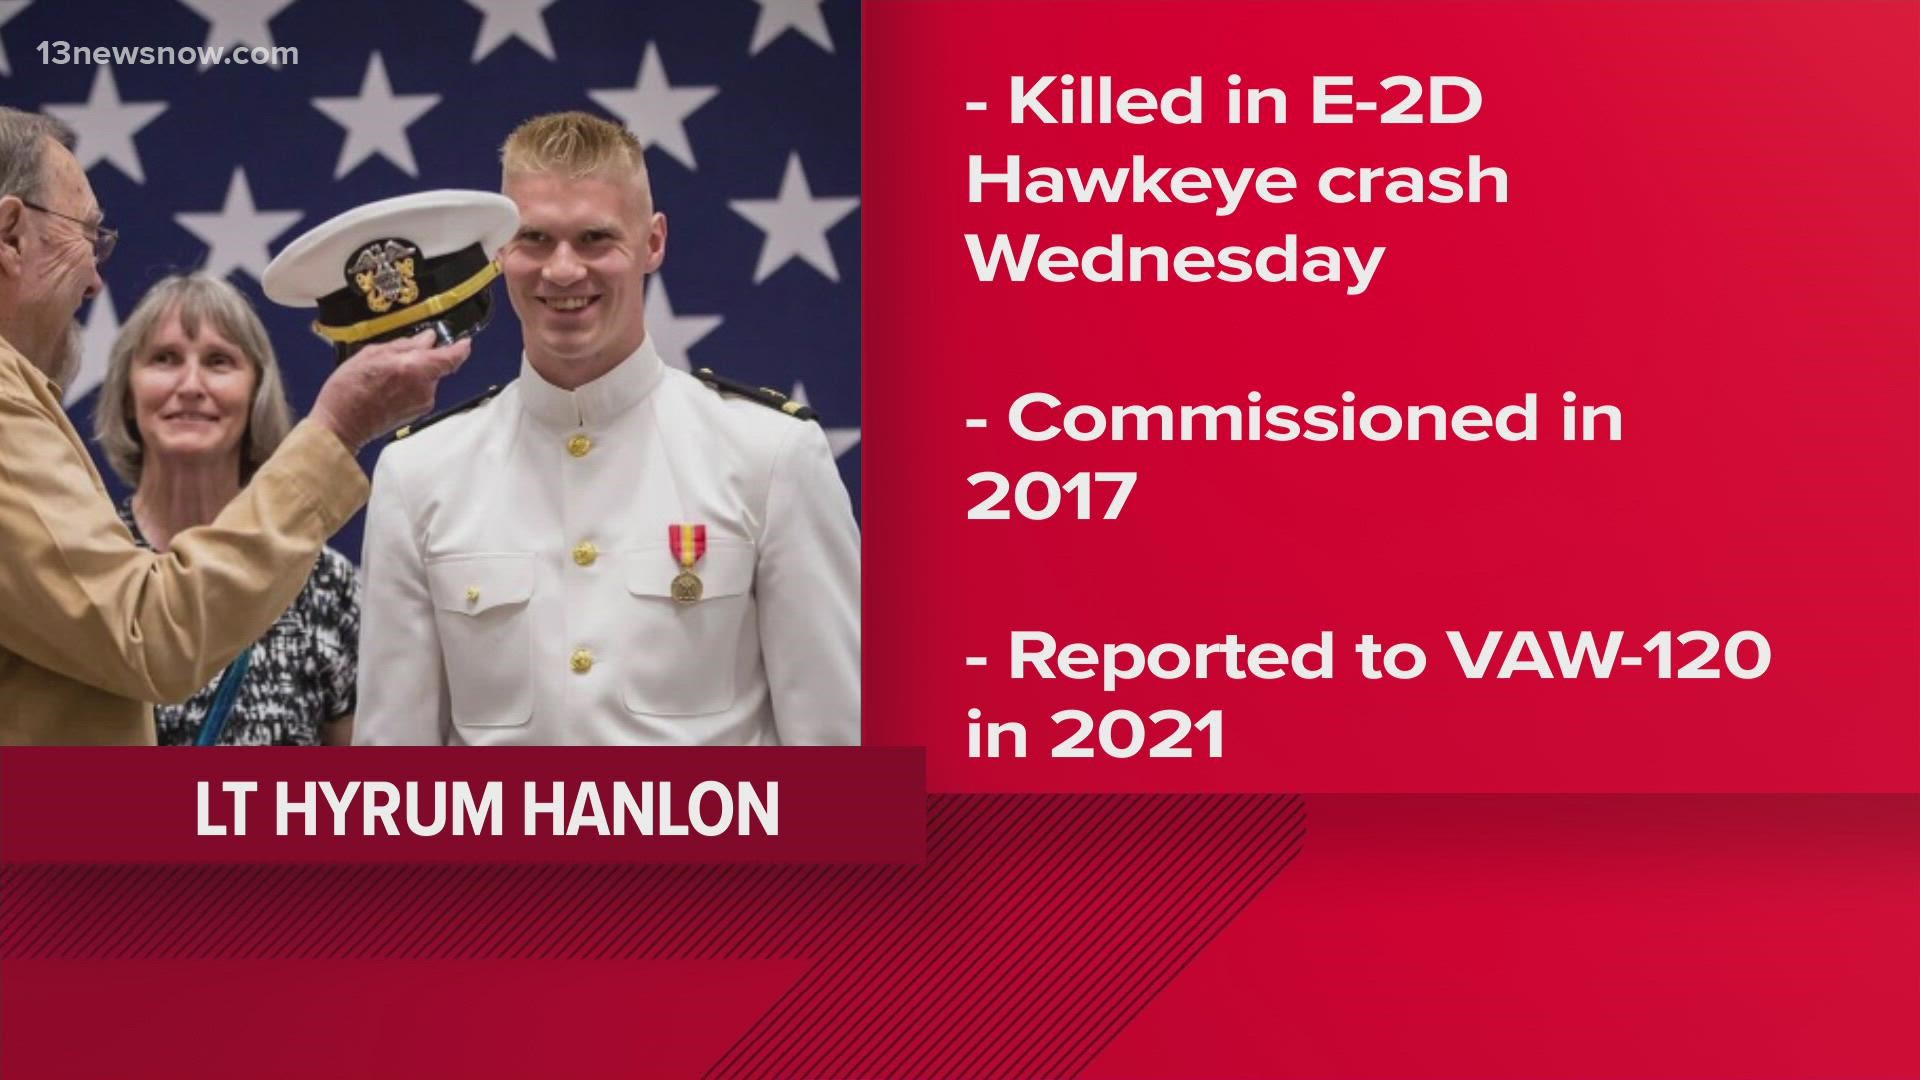 Lt. Hyrum Hanlon was killed in the crash  Wednesday night on Virginia's Eastern Shore.